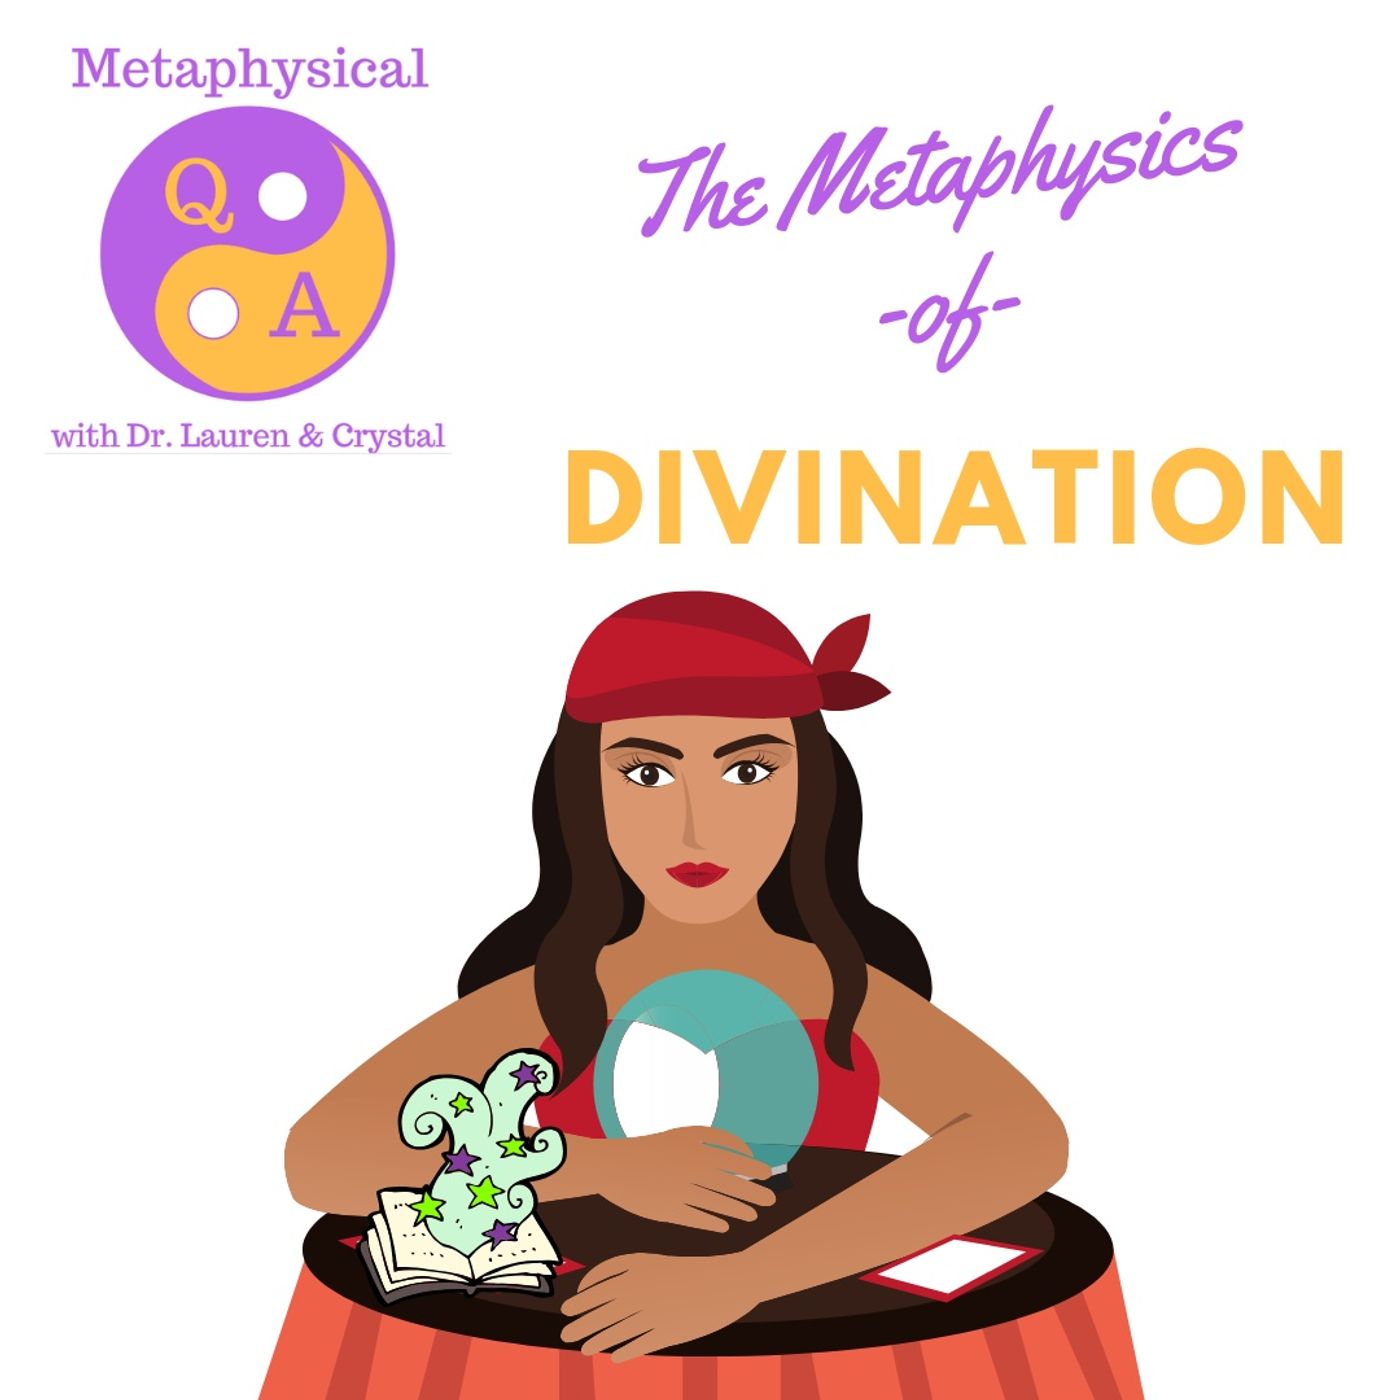 Metaphysics of Divination